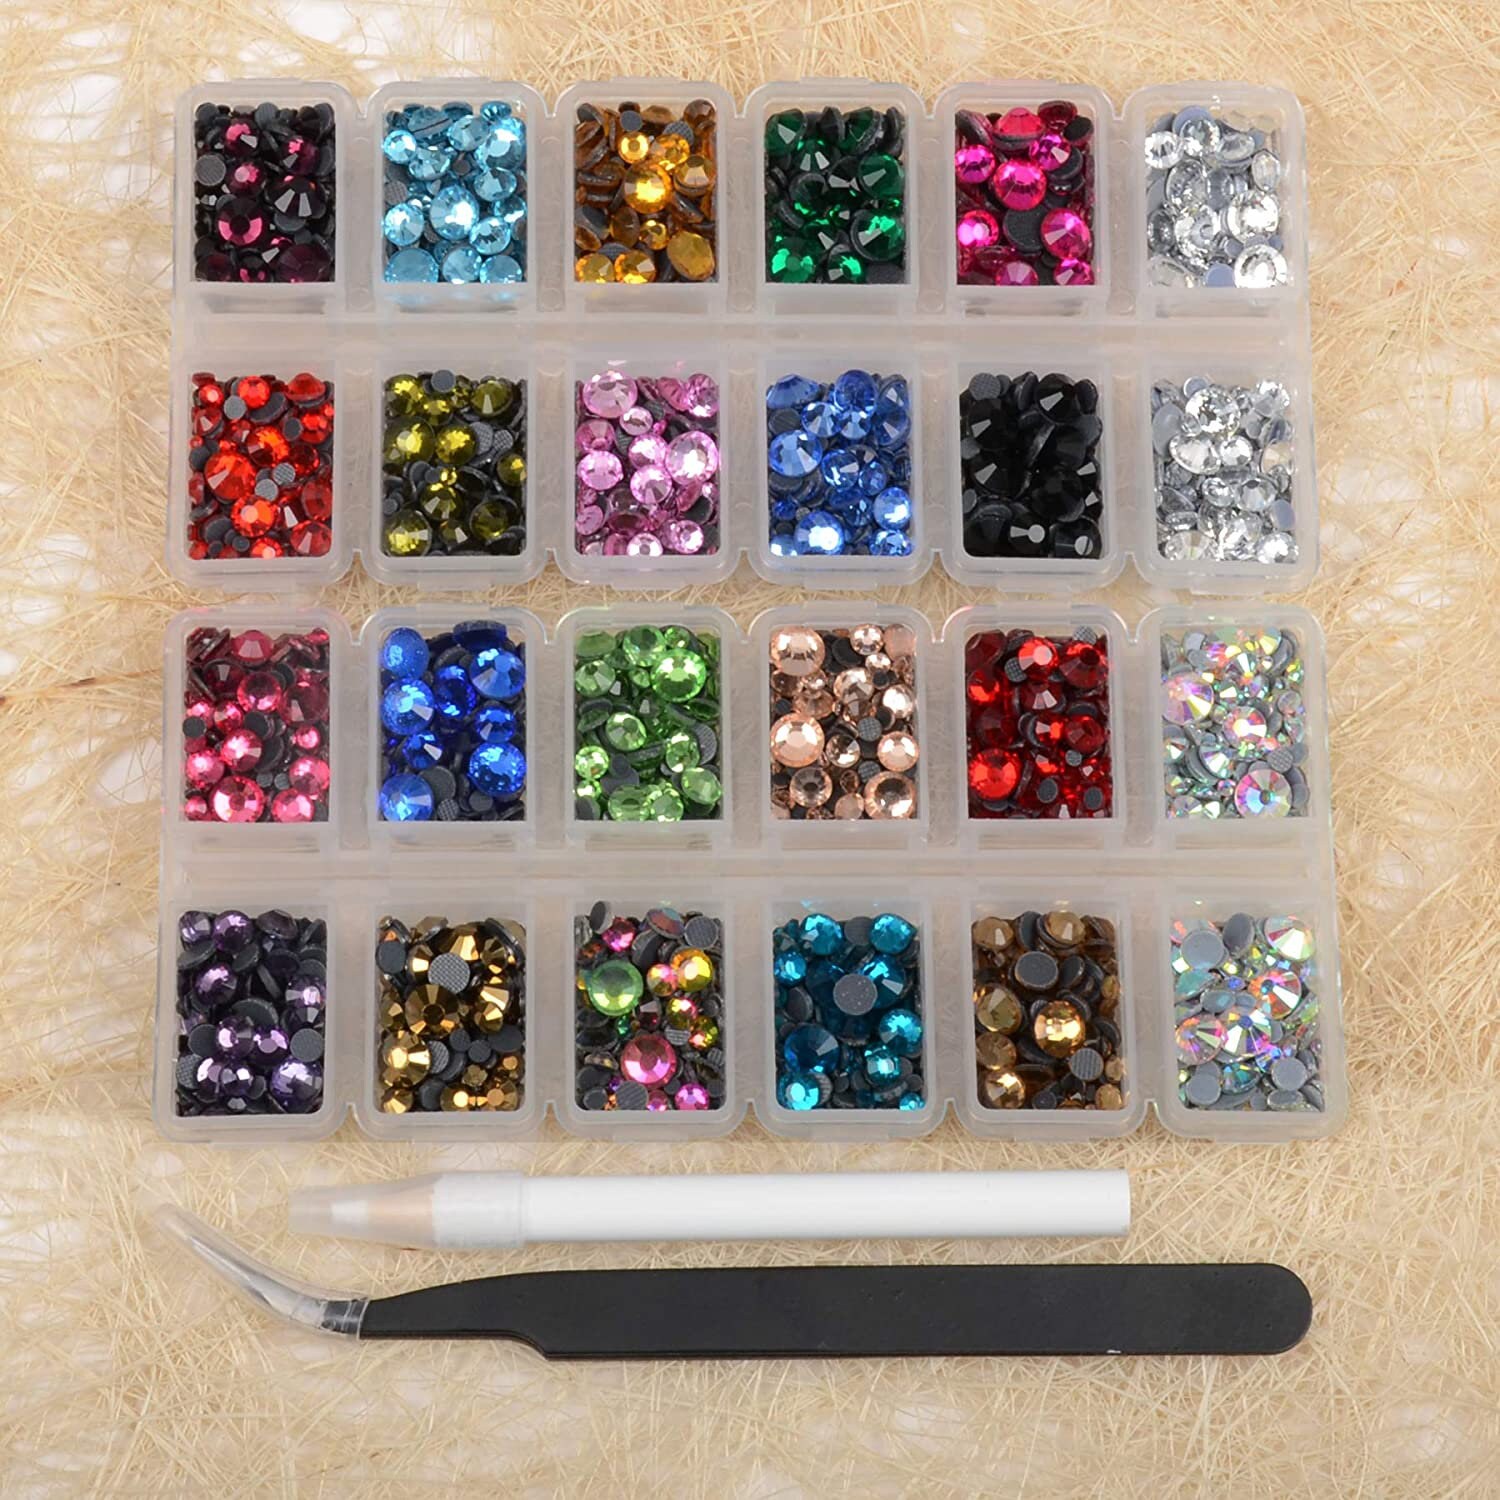 High Quality 1440Pcs/Bulk Hotfix Rhinestones SS6-SS30 стразы Flatback  Stones Glitter Crystal and Strass For DIY Nail Accessories - AliExpress